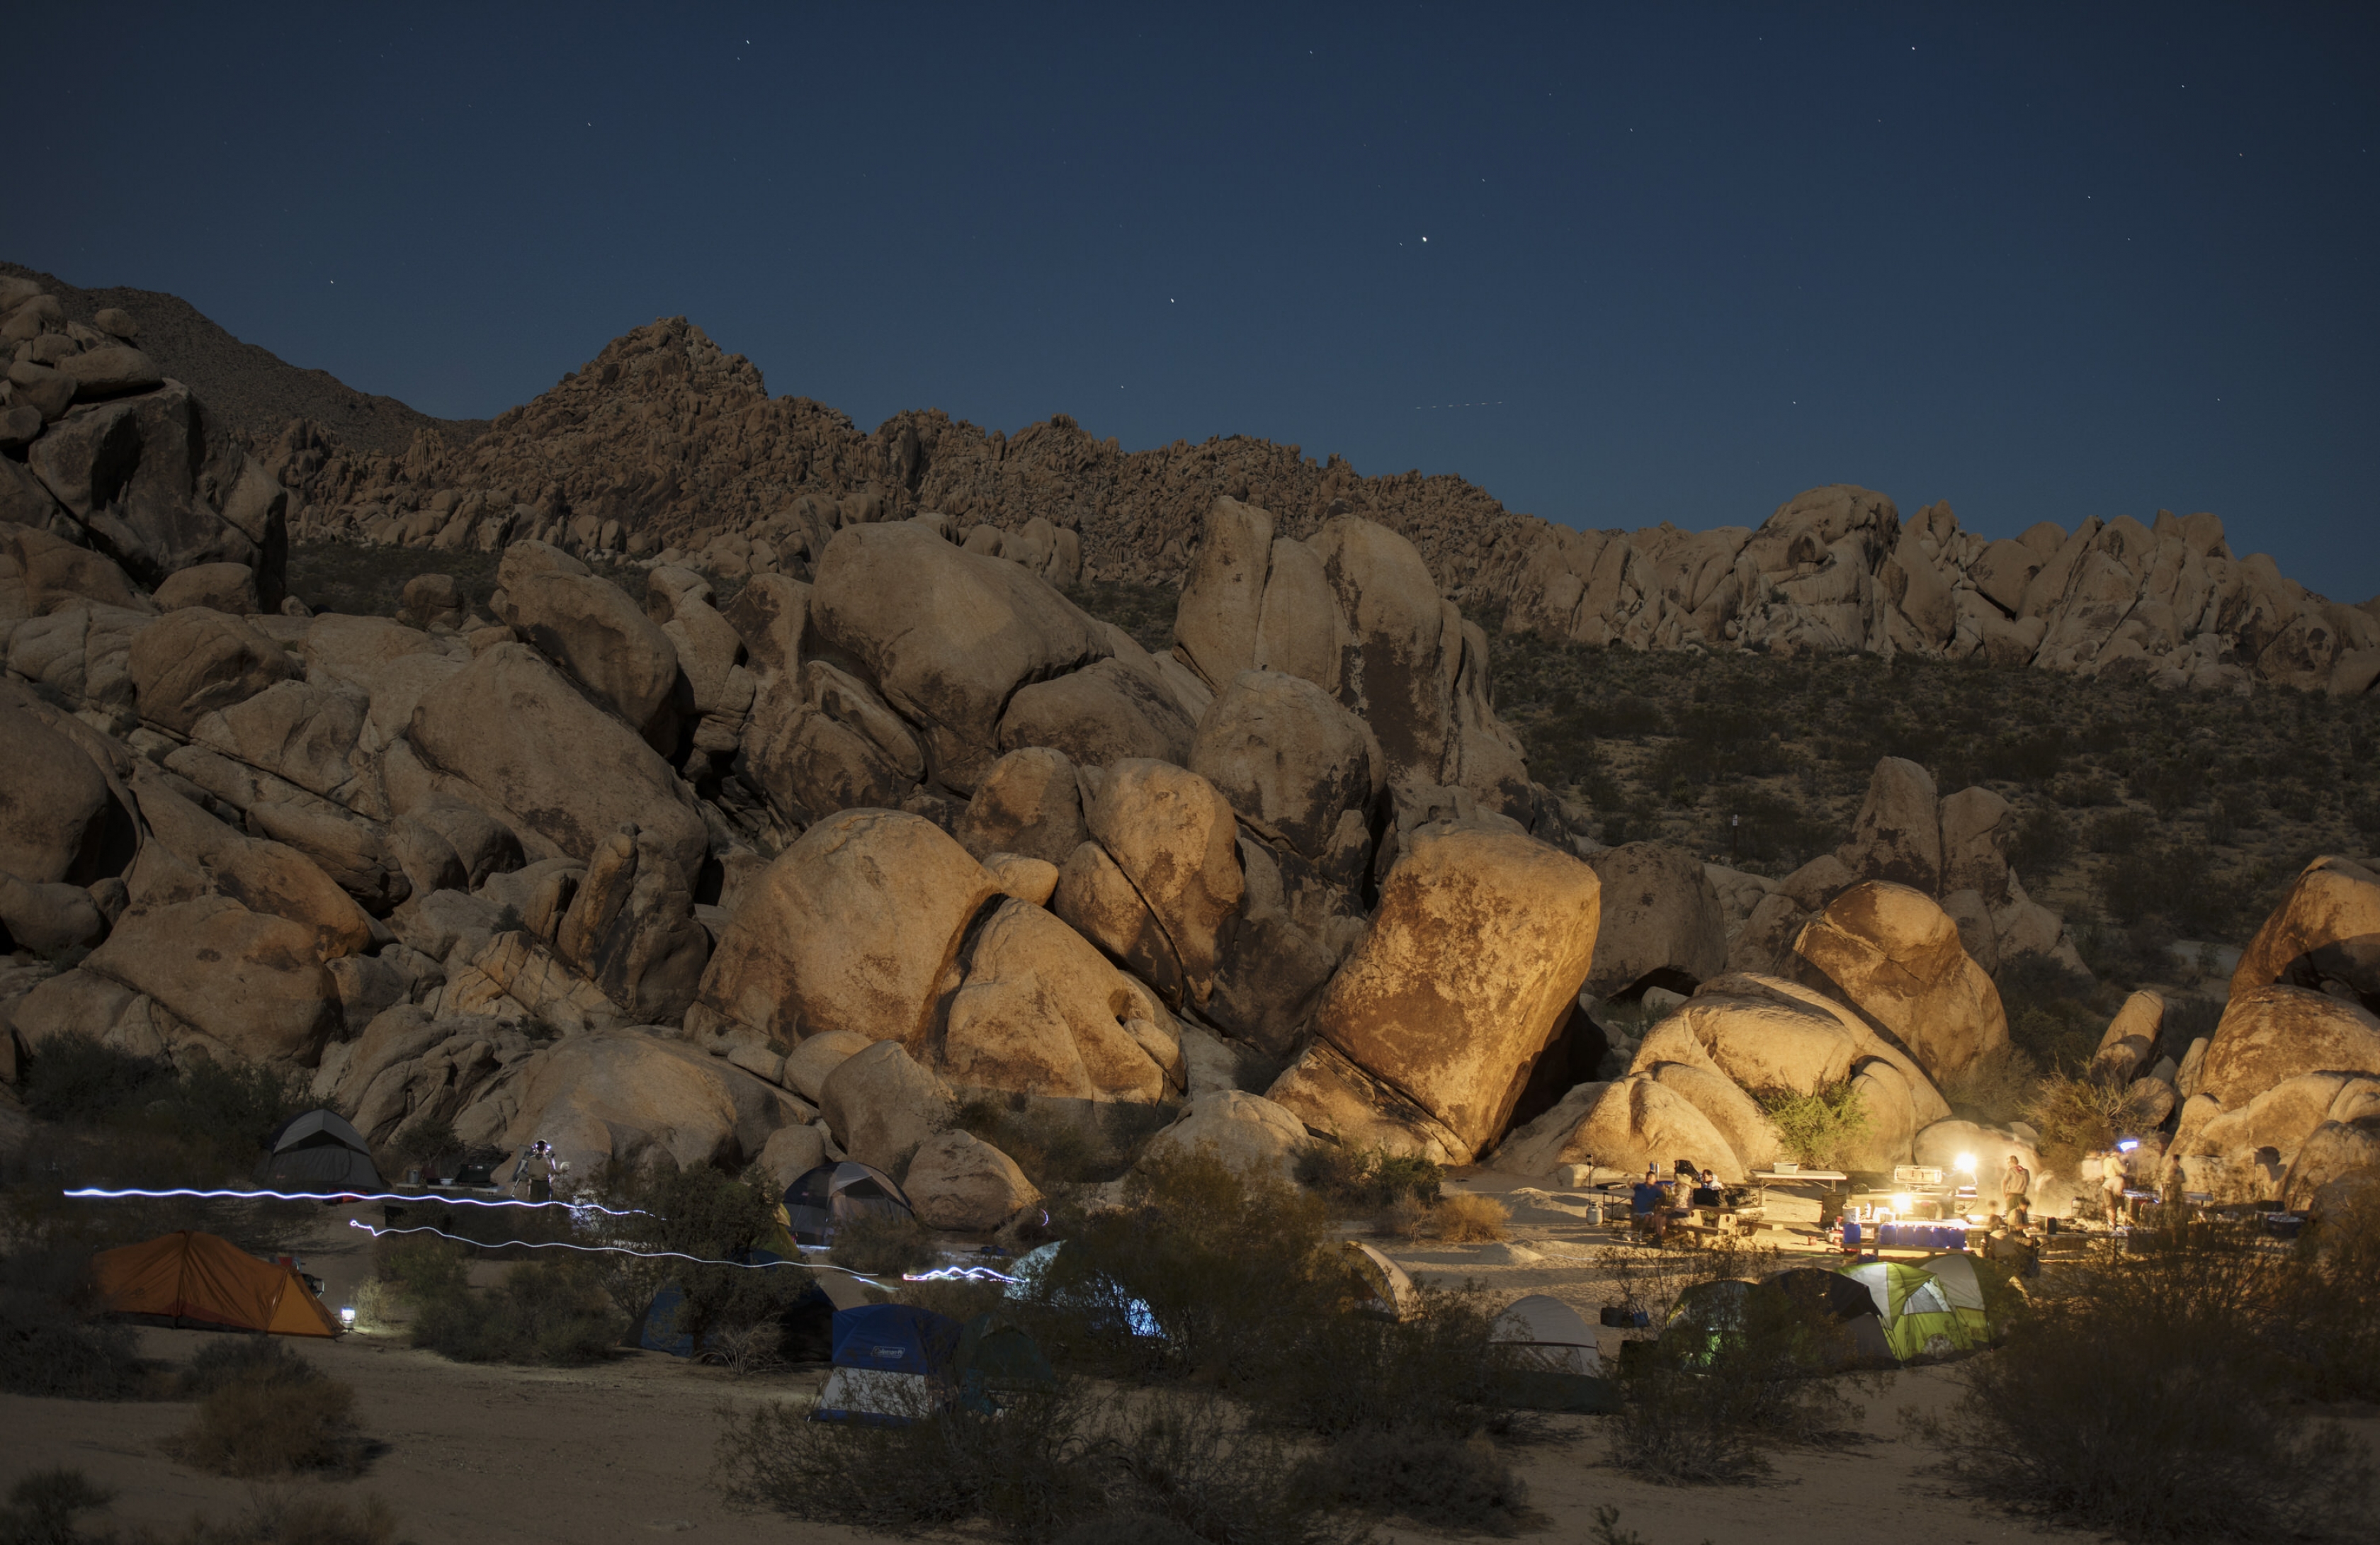 Illuminated campground under a starry night at Joshua Tree National Park